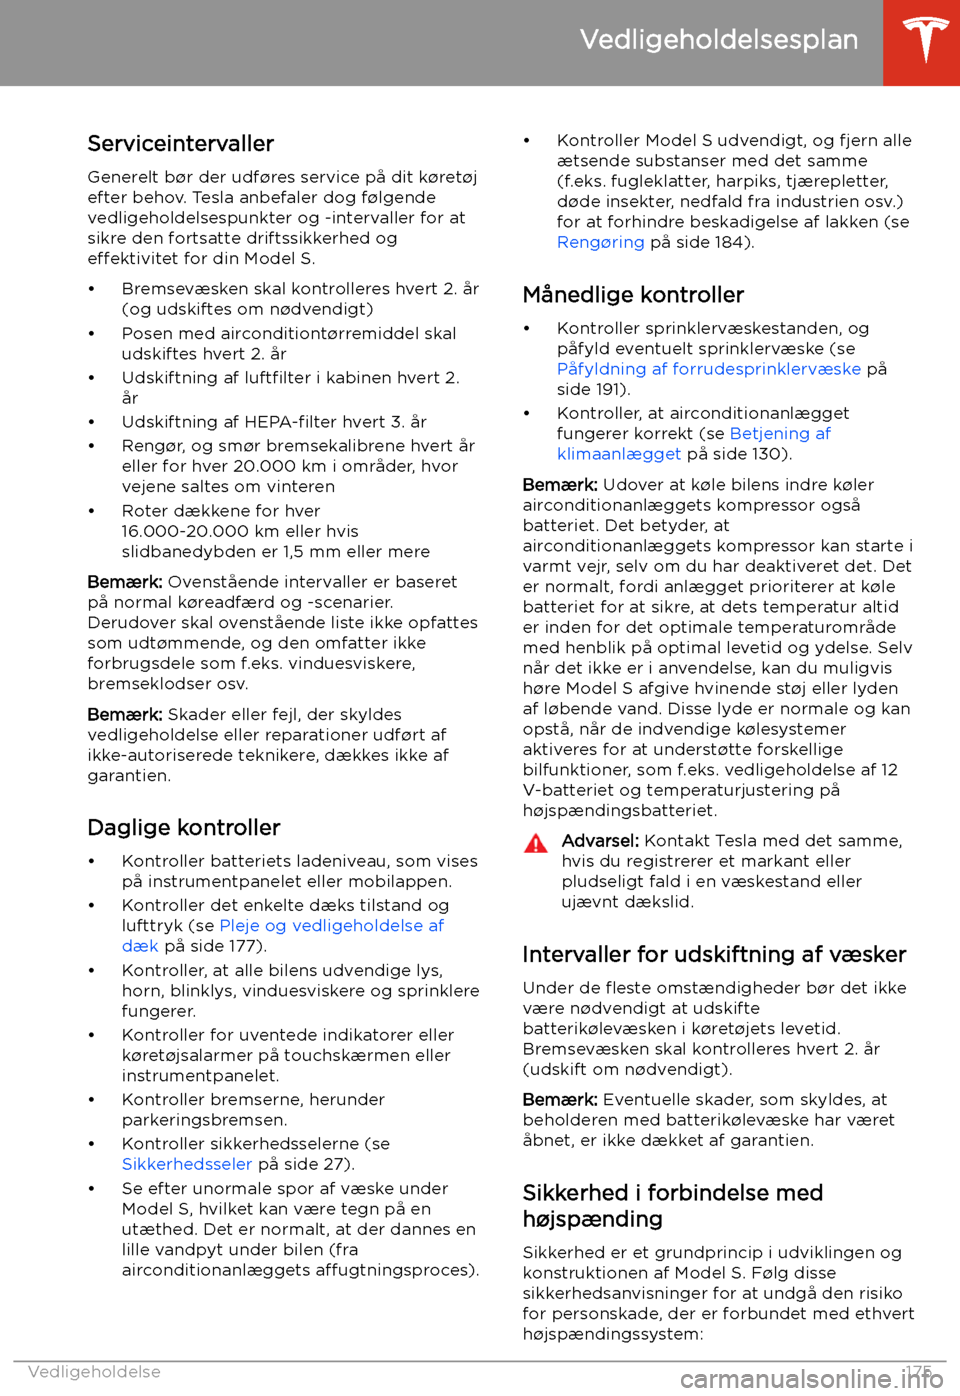 TESLA MODEL S 2020  Instruktionsbog (in Danish) Vedligeholdelse
Vedligeholdelsesplan
Serviceintervaller
Generelt b